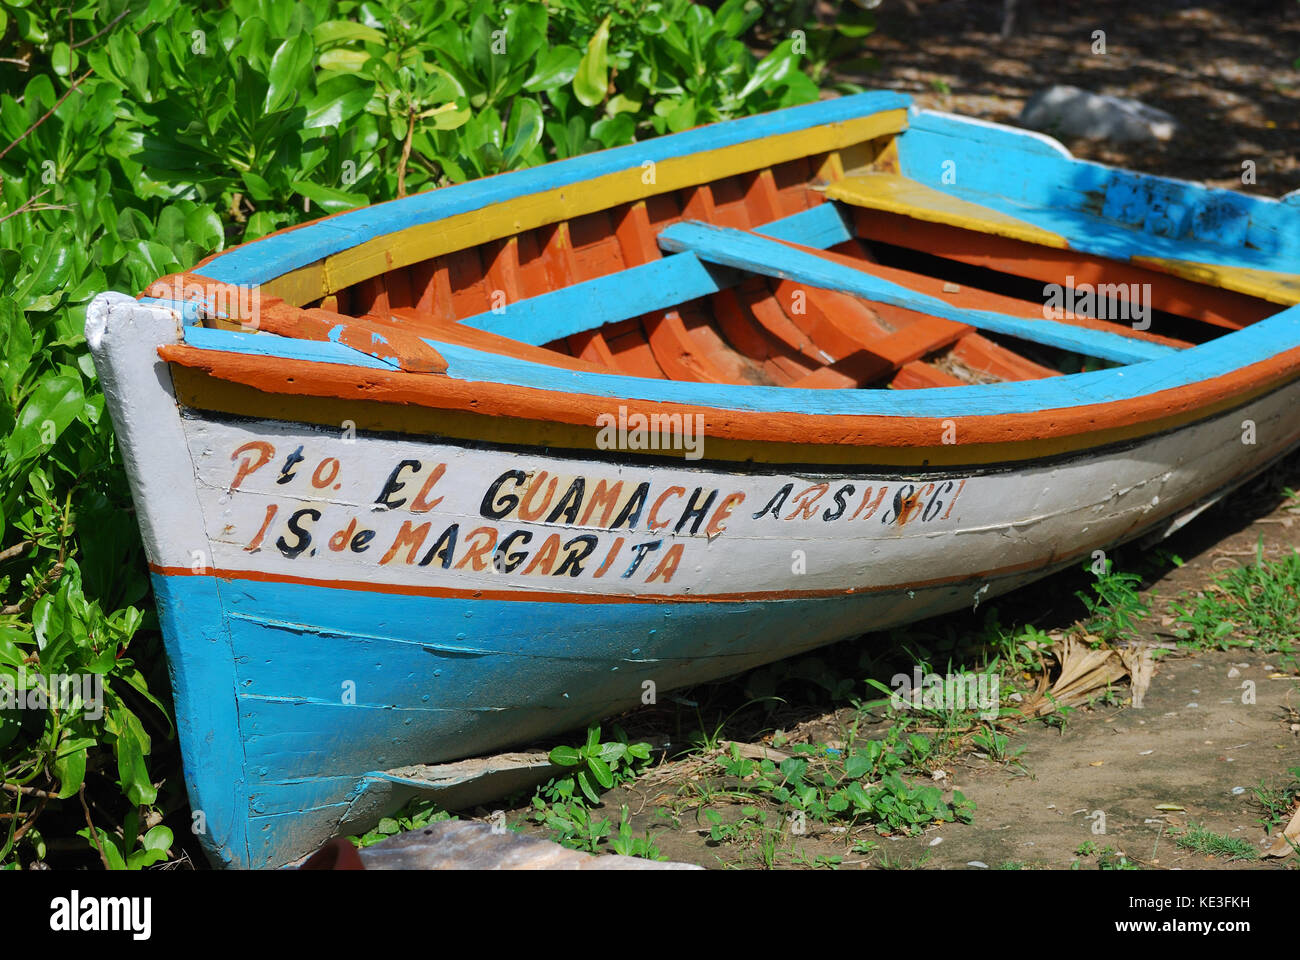 Boat on Margarita Island, Venezuela Stock Photo